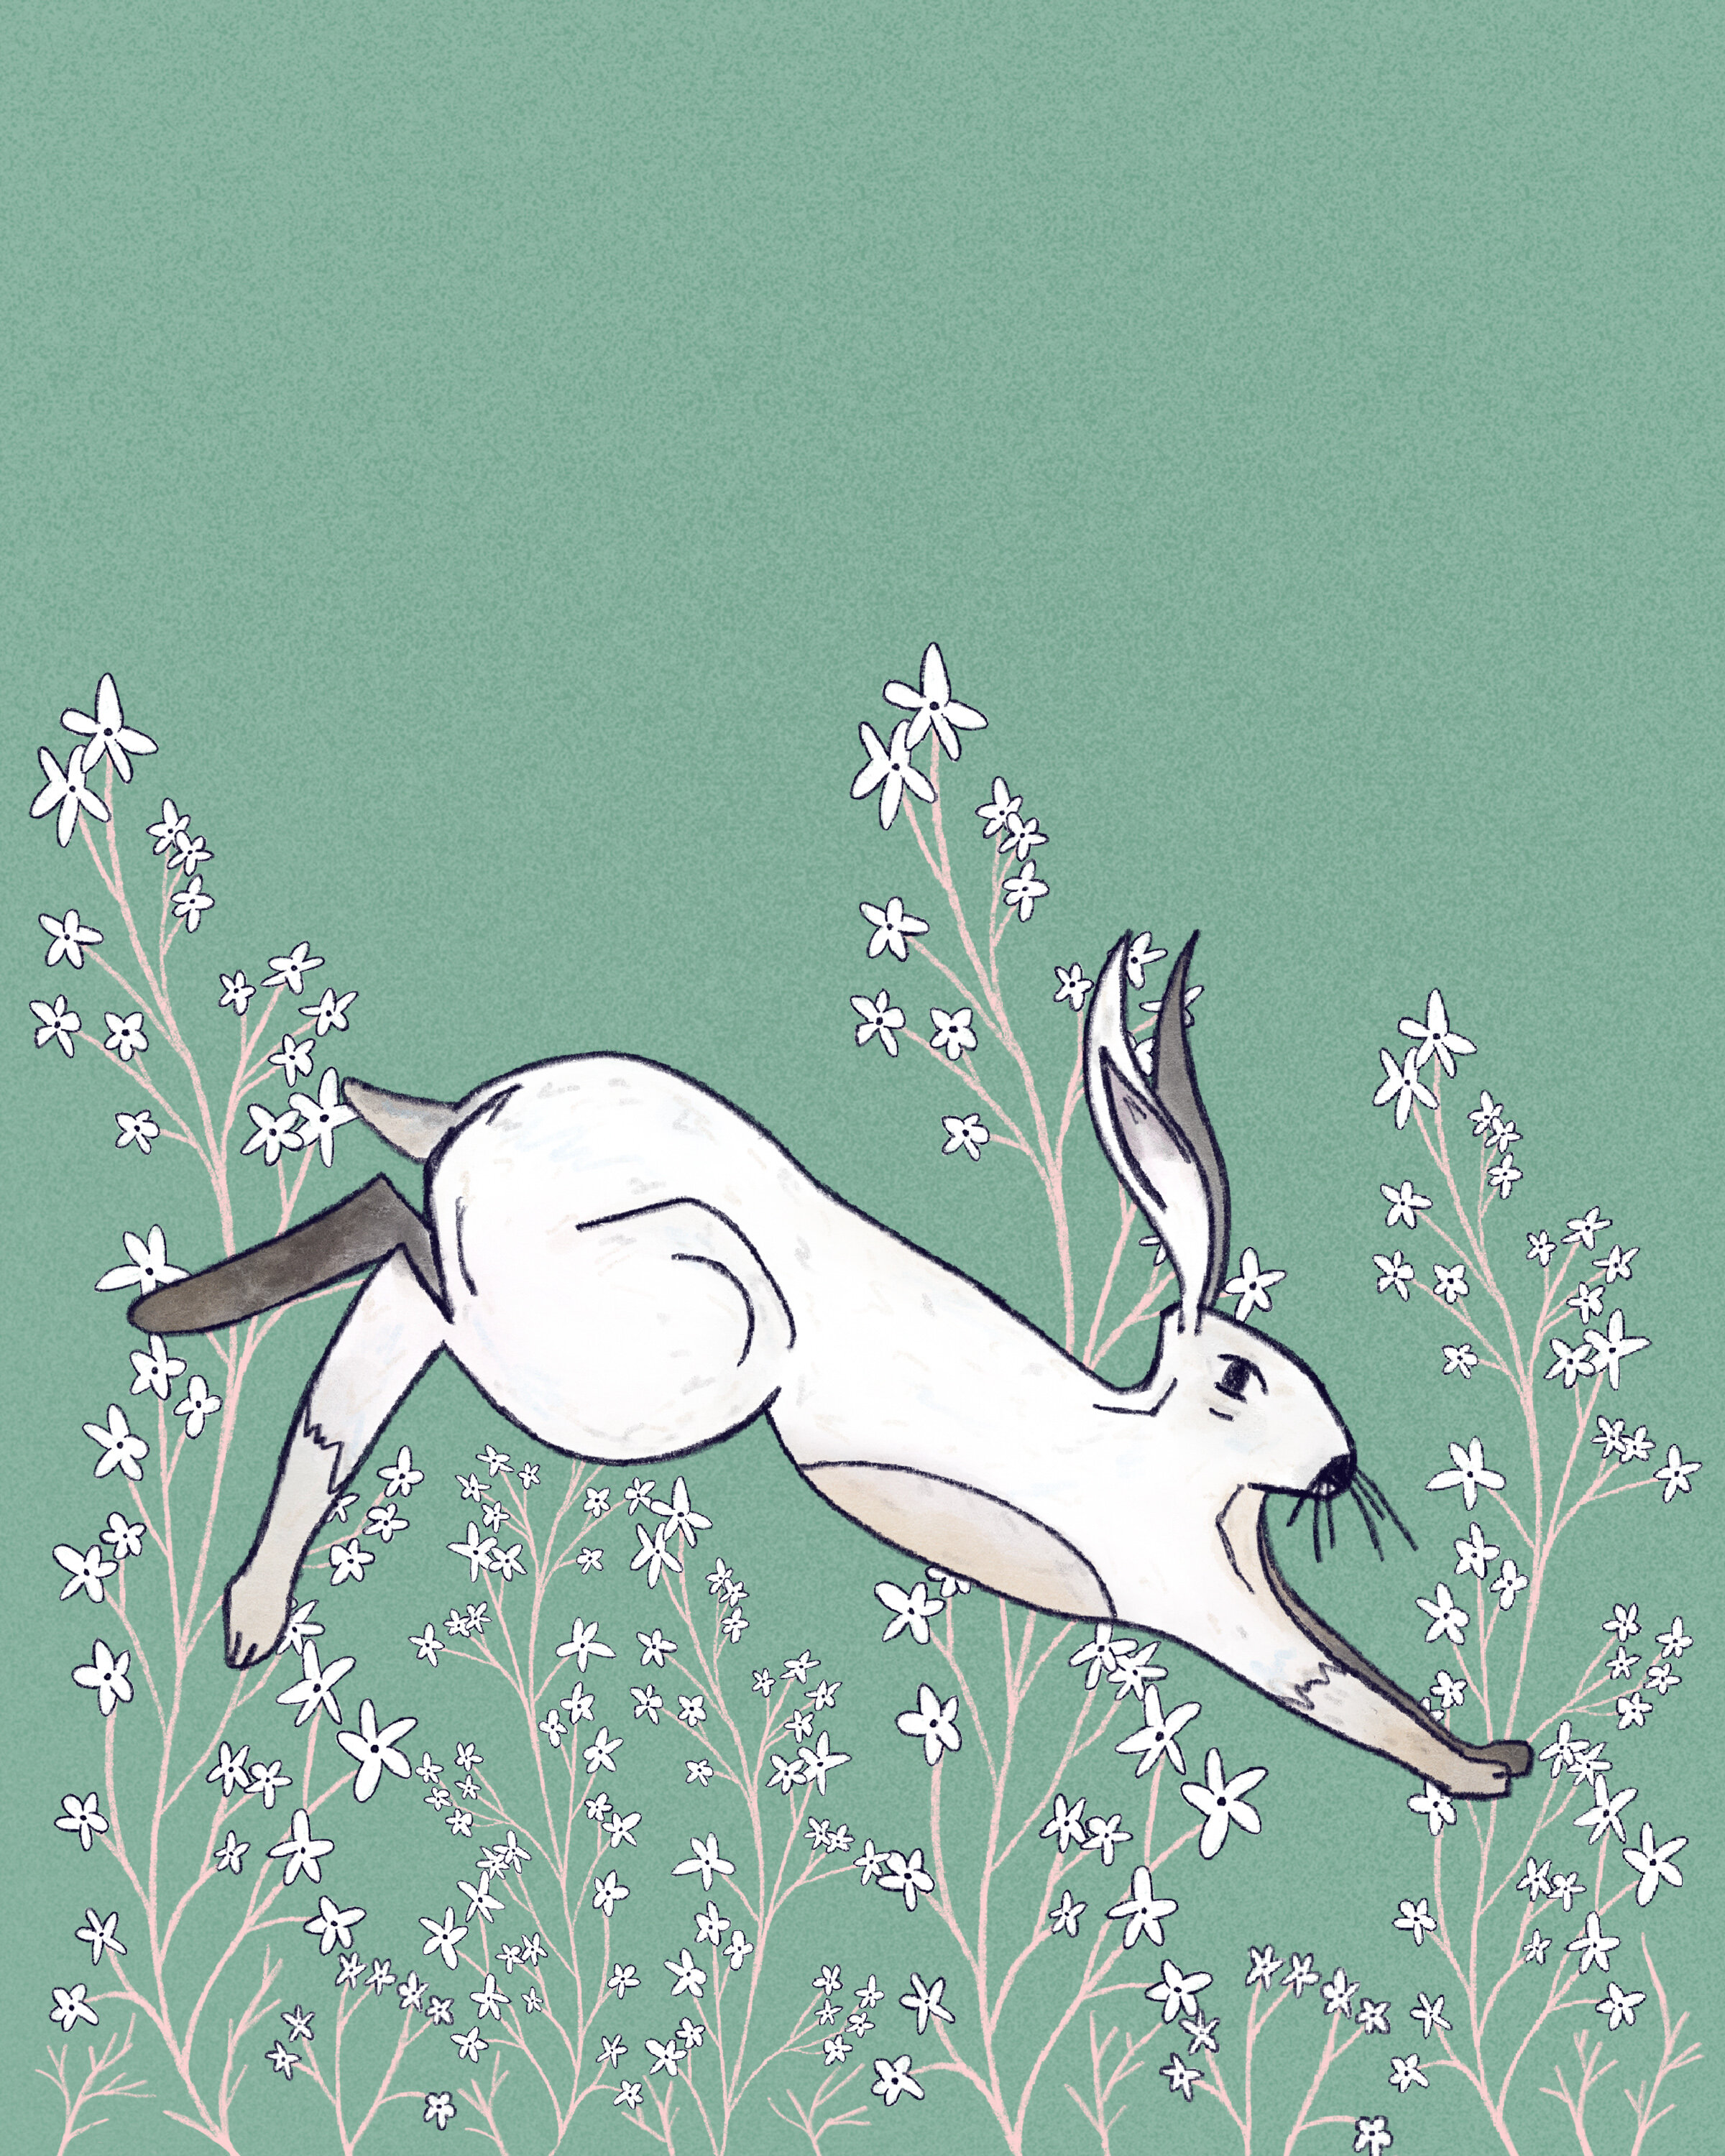 Rabbit in flowers 8x10.jpg